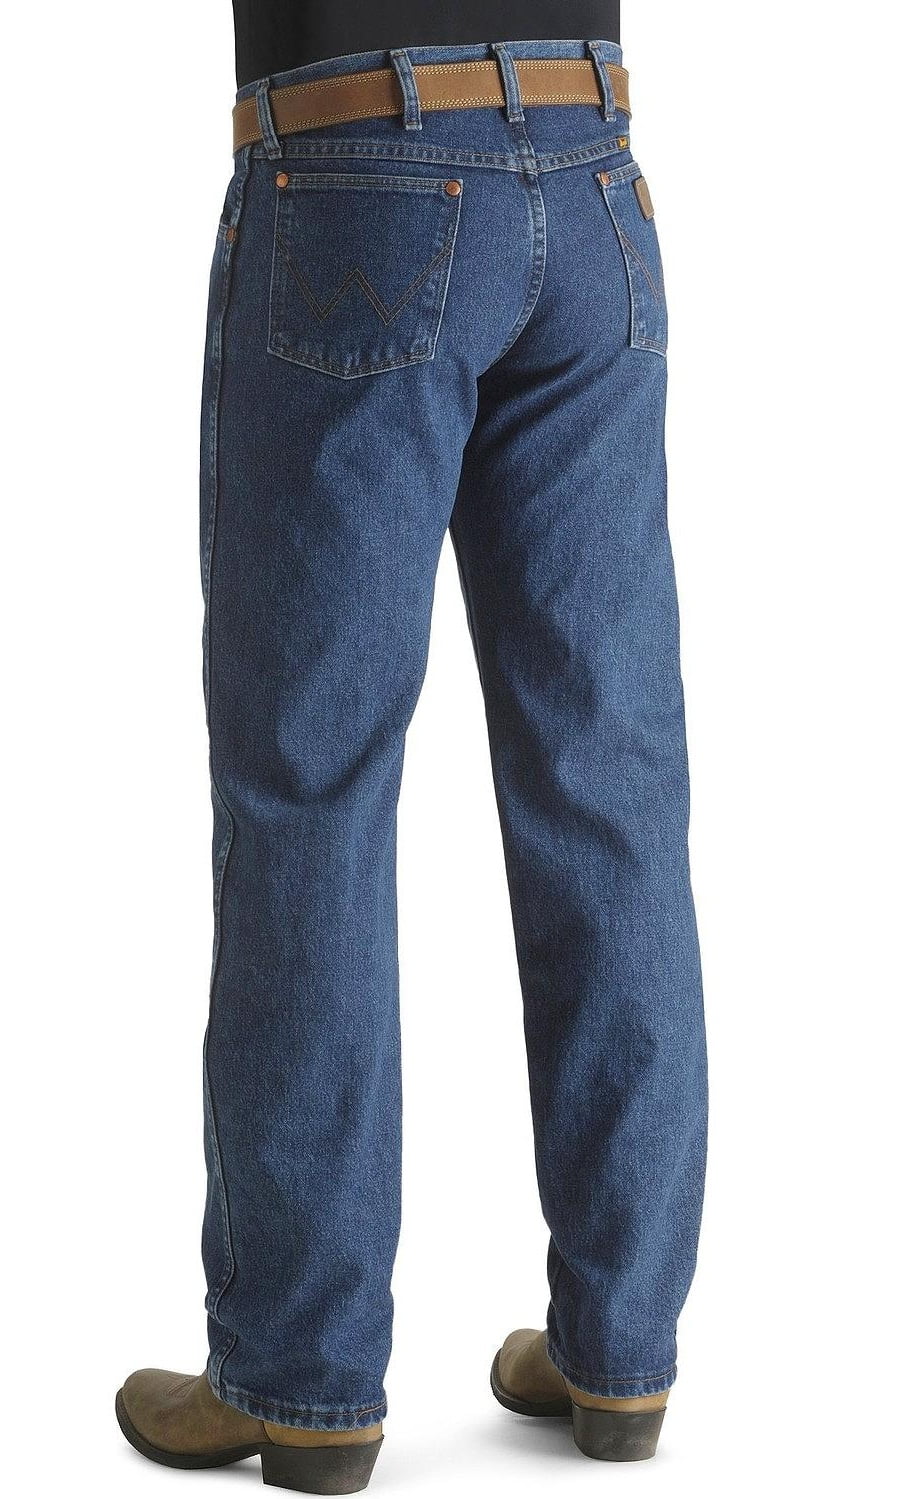 Wrangler Men's Jeans Relaxed Original Fit Premium Wash Reg - 13Mwzro_X5 -  